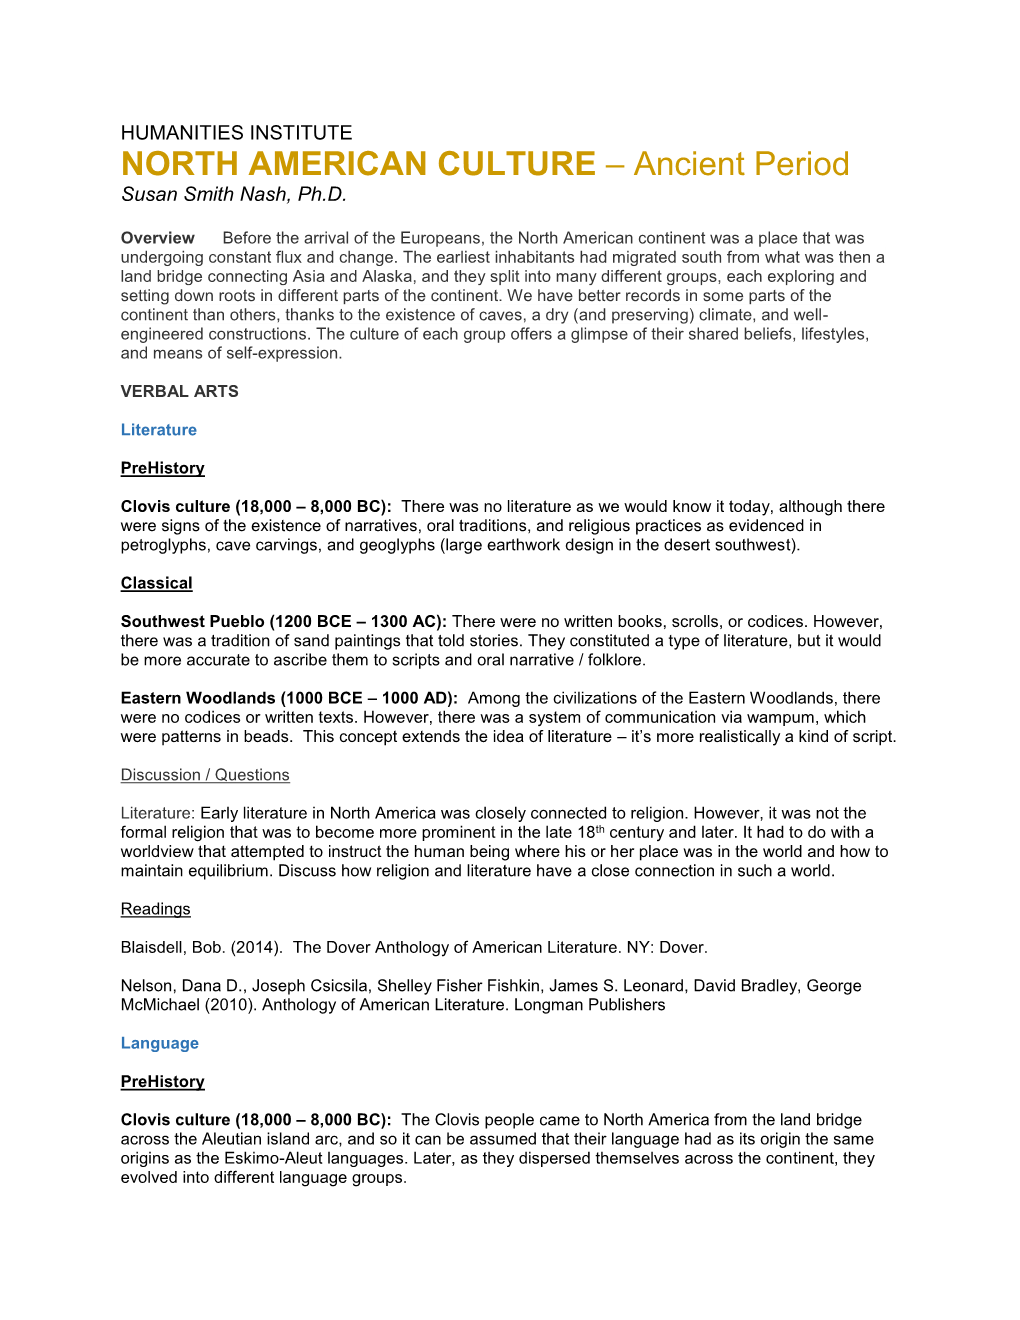 NORTH AMERICAN CULTURE – Ancient Period Susan Smith Nash, Ph.D